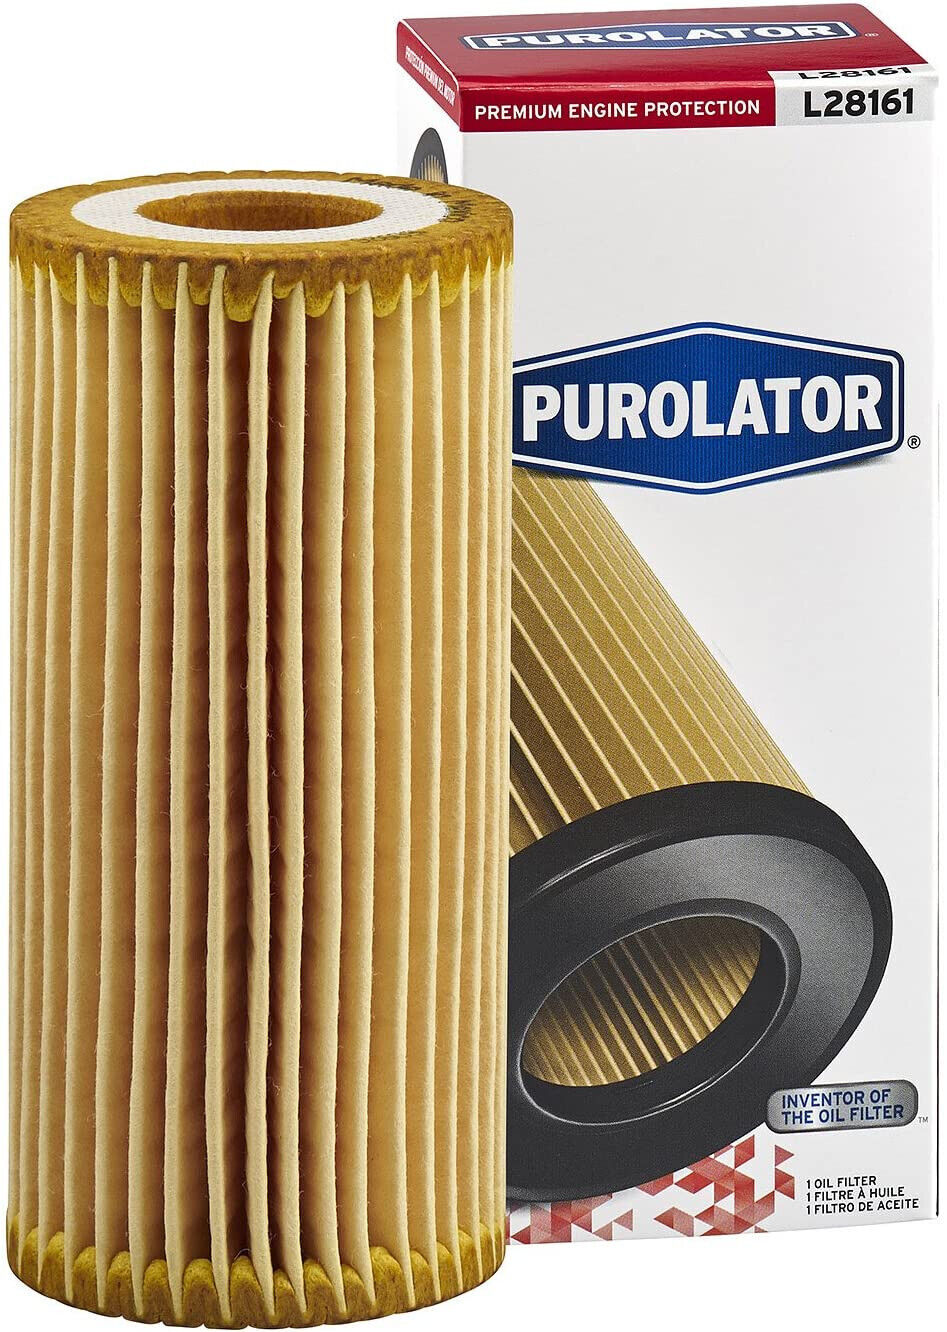 L28161 Purolator Engine Oil Filter